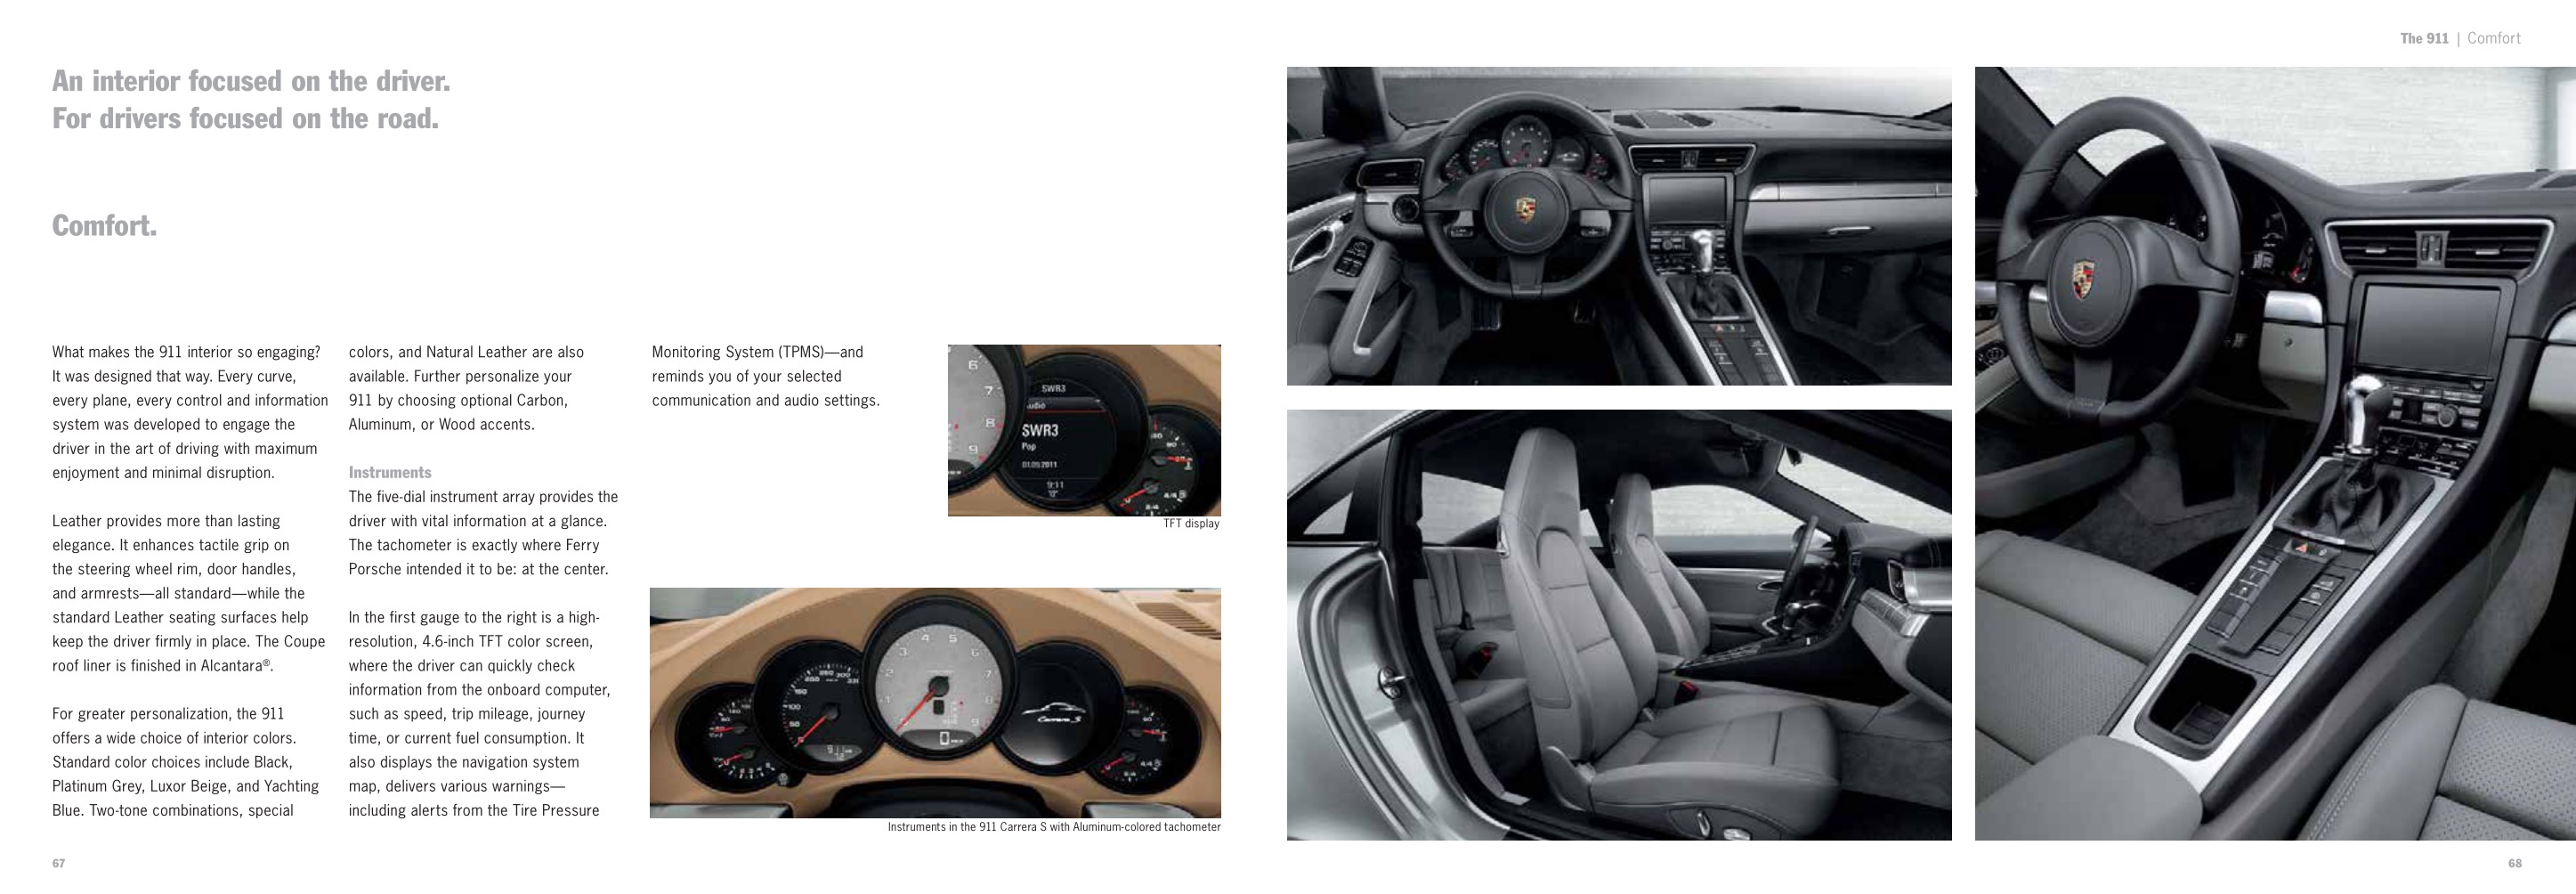 2013 Porsche 911 Brochure Page 17